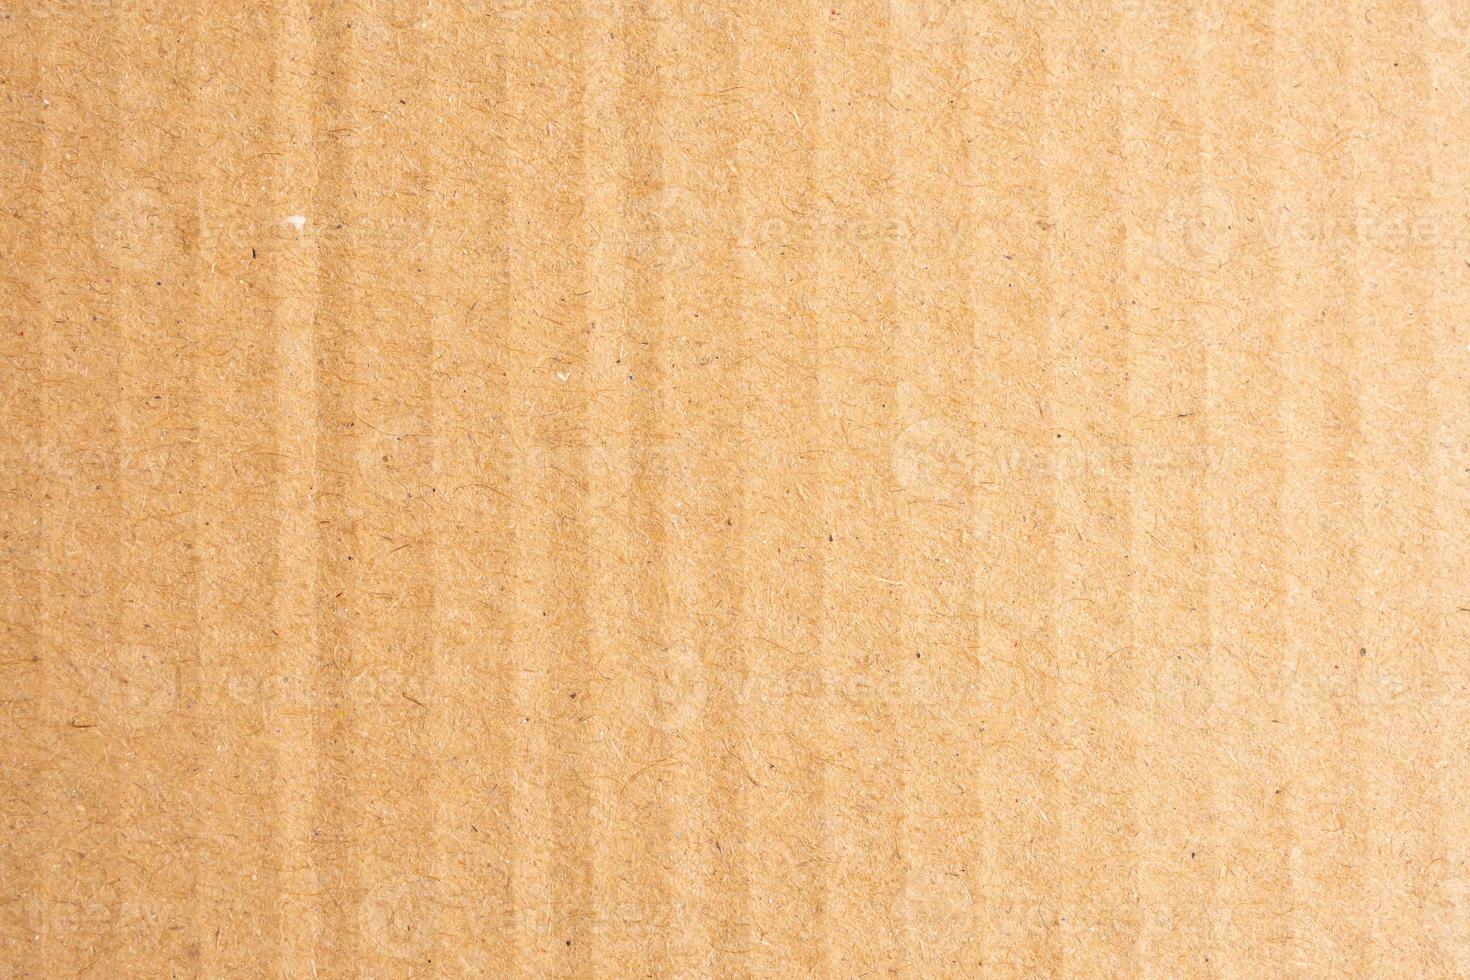 Fondo de textura de papel de caja de cartón marrón antiguo foto